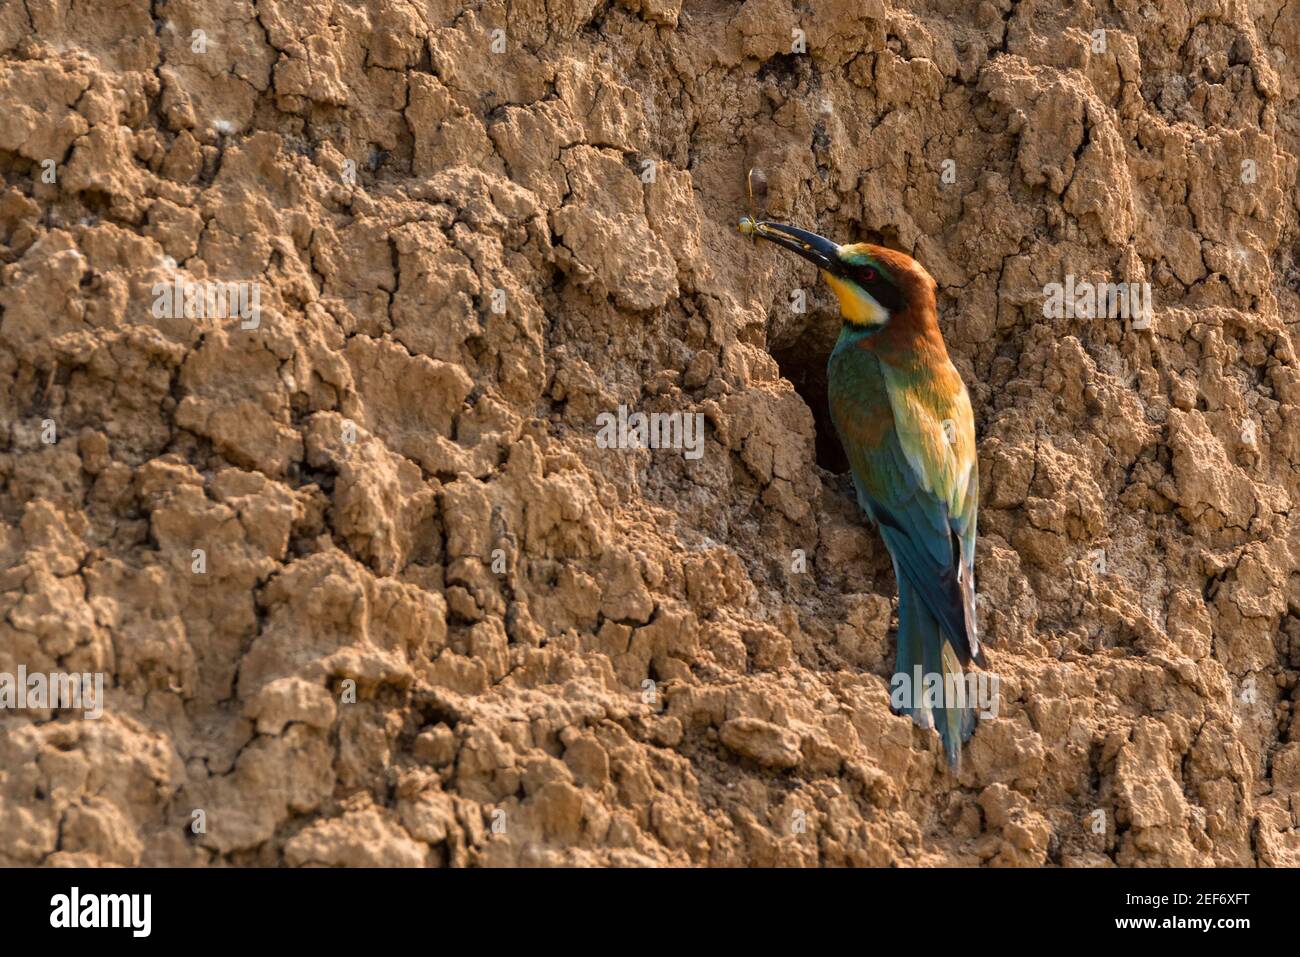 Europäischer Bienenfresser oder Merops apiaster isst am Loch im Felsen. Rückansicht. Selektiver Fokus Stockfoto